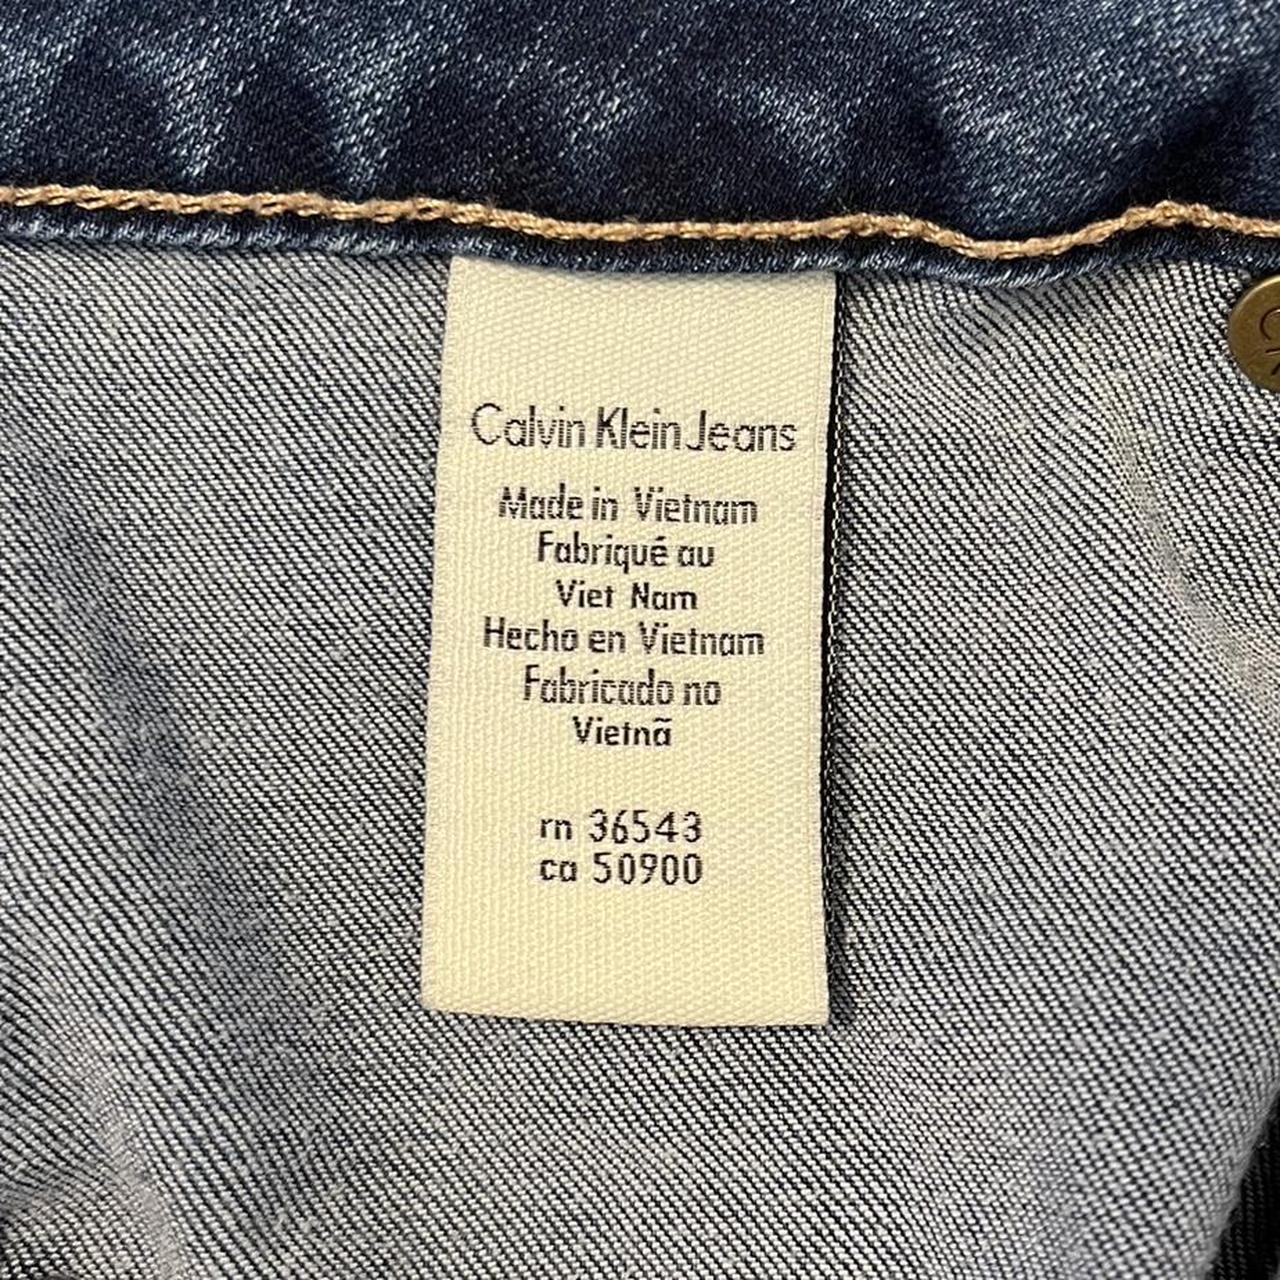 Calvin Klein Jeans Men's Navy and Blue Jeans | Depop